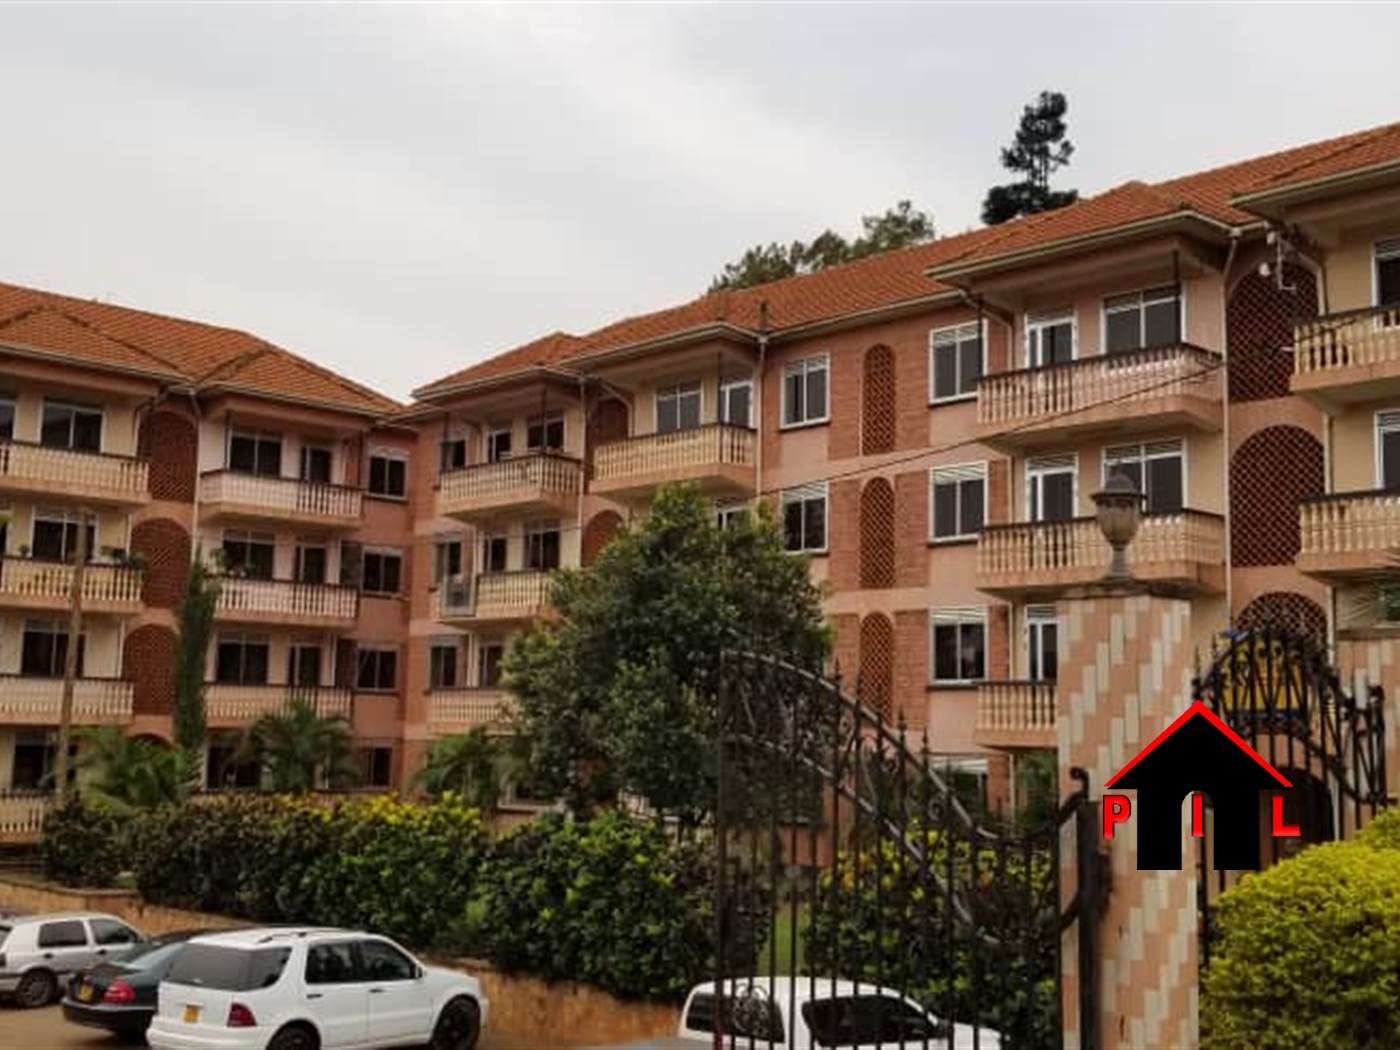 Apartment block for sale in Luzira Kampala